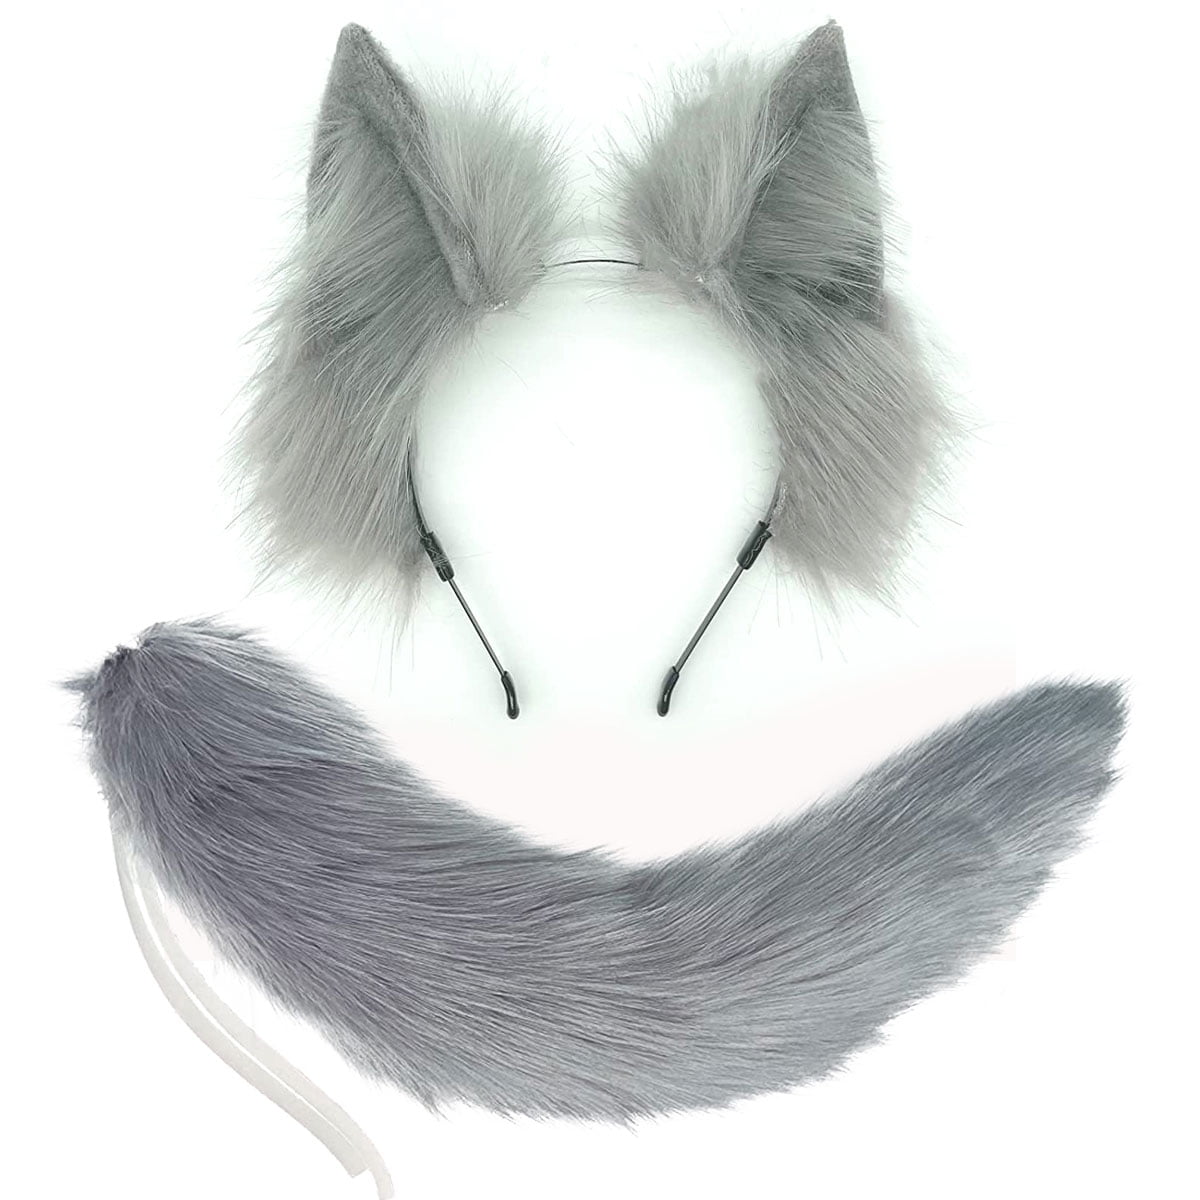 W Faux Fox Fur Cat Ears S H P Cy Ce F Hair Band C $1.82 blog ...